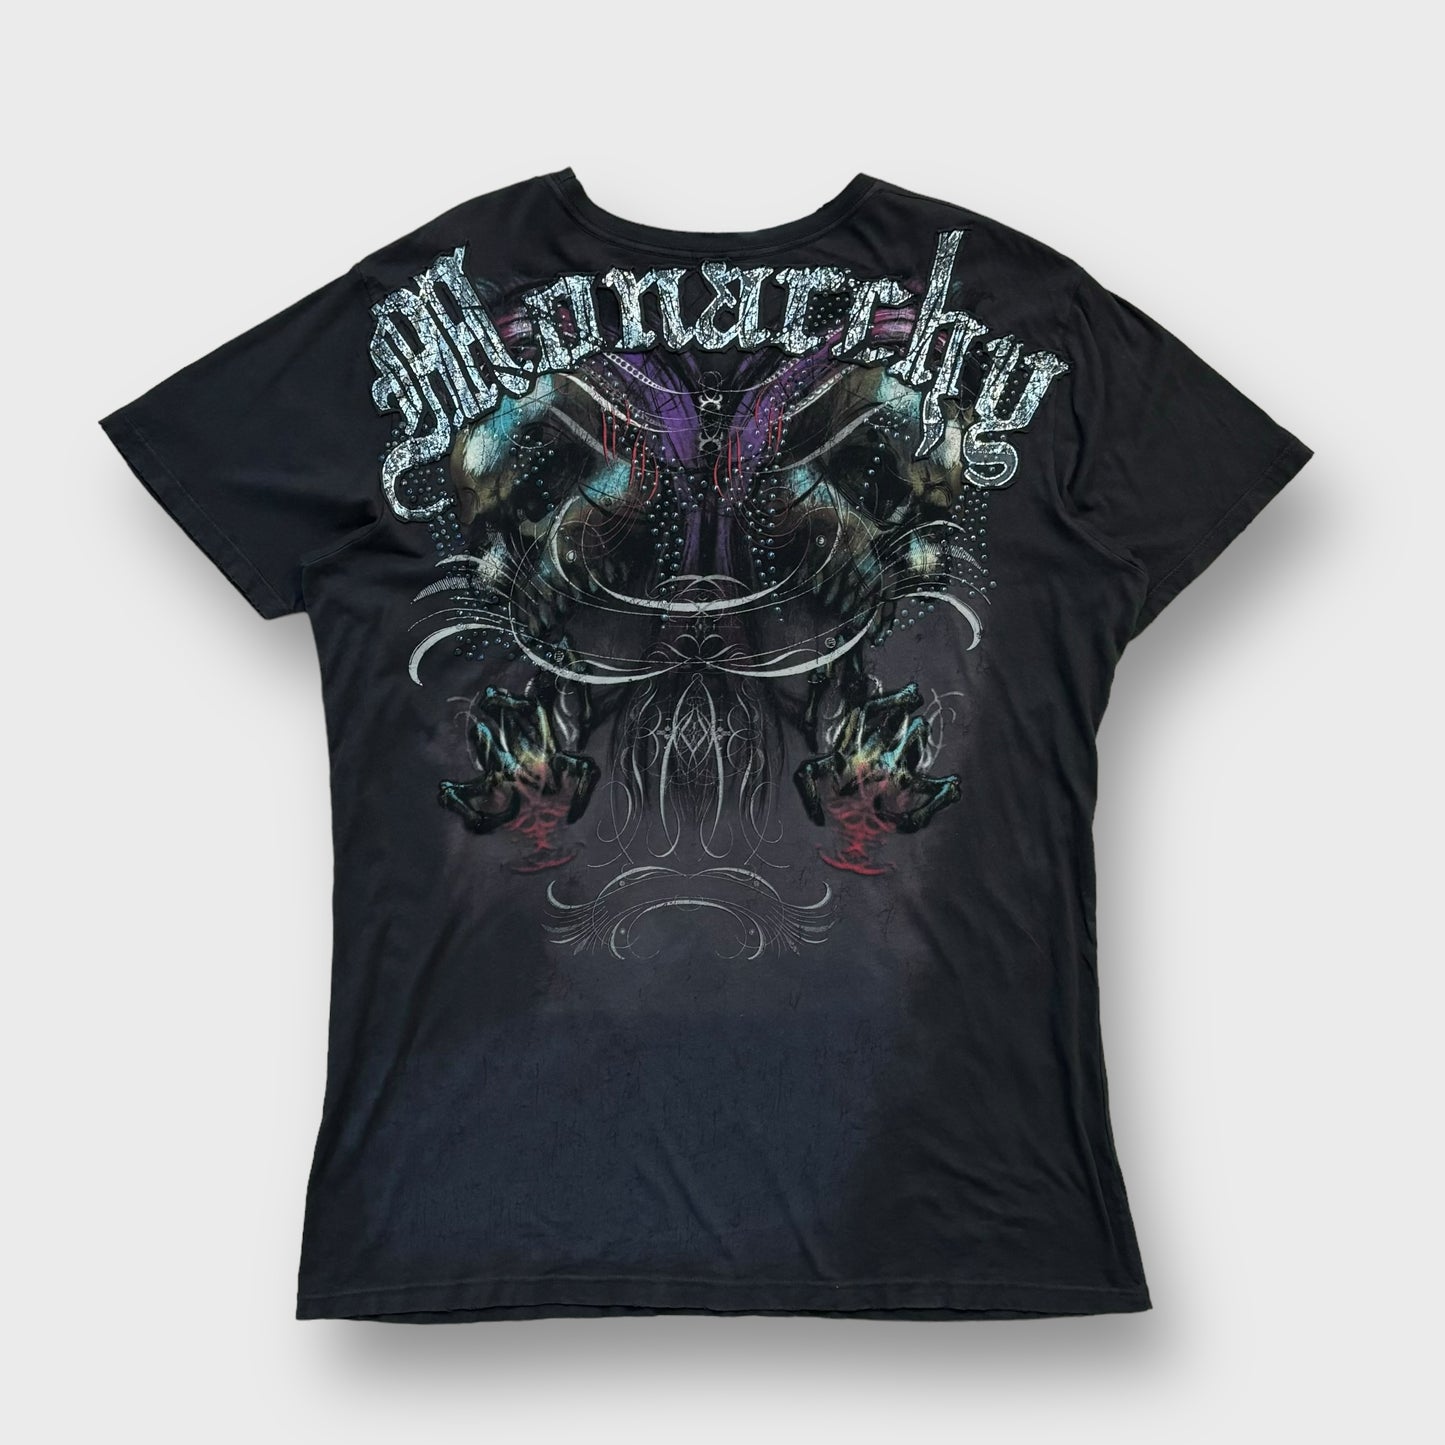 "MONARCHY" graphic design t-shirt